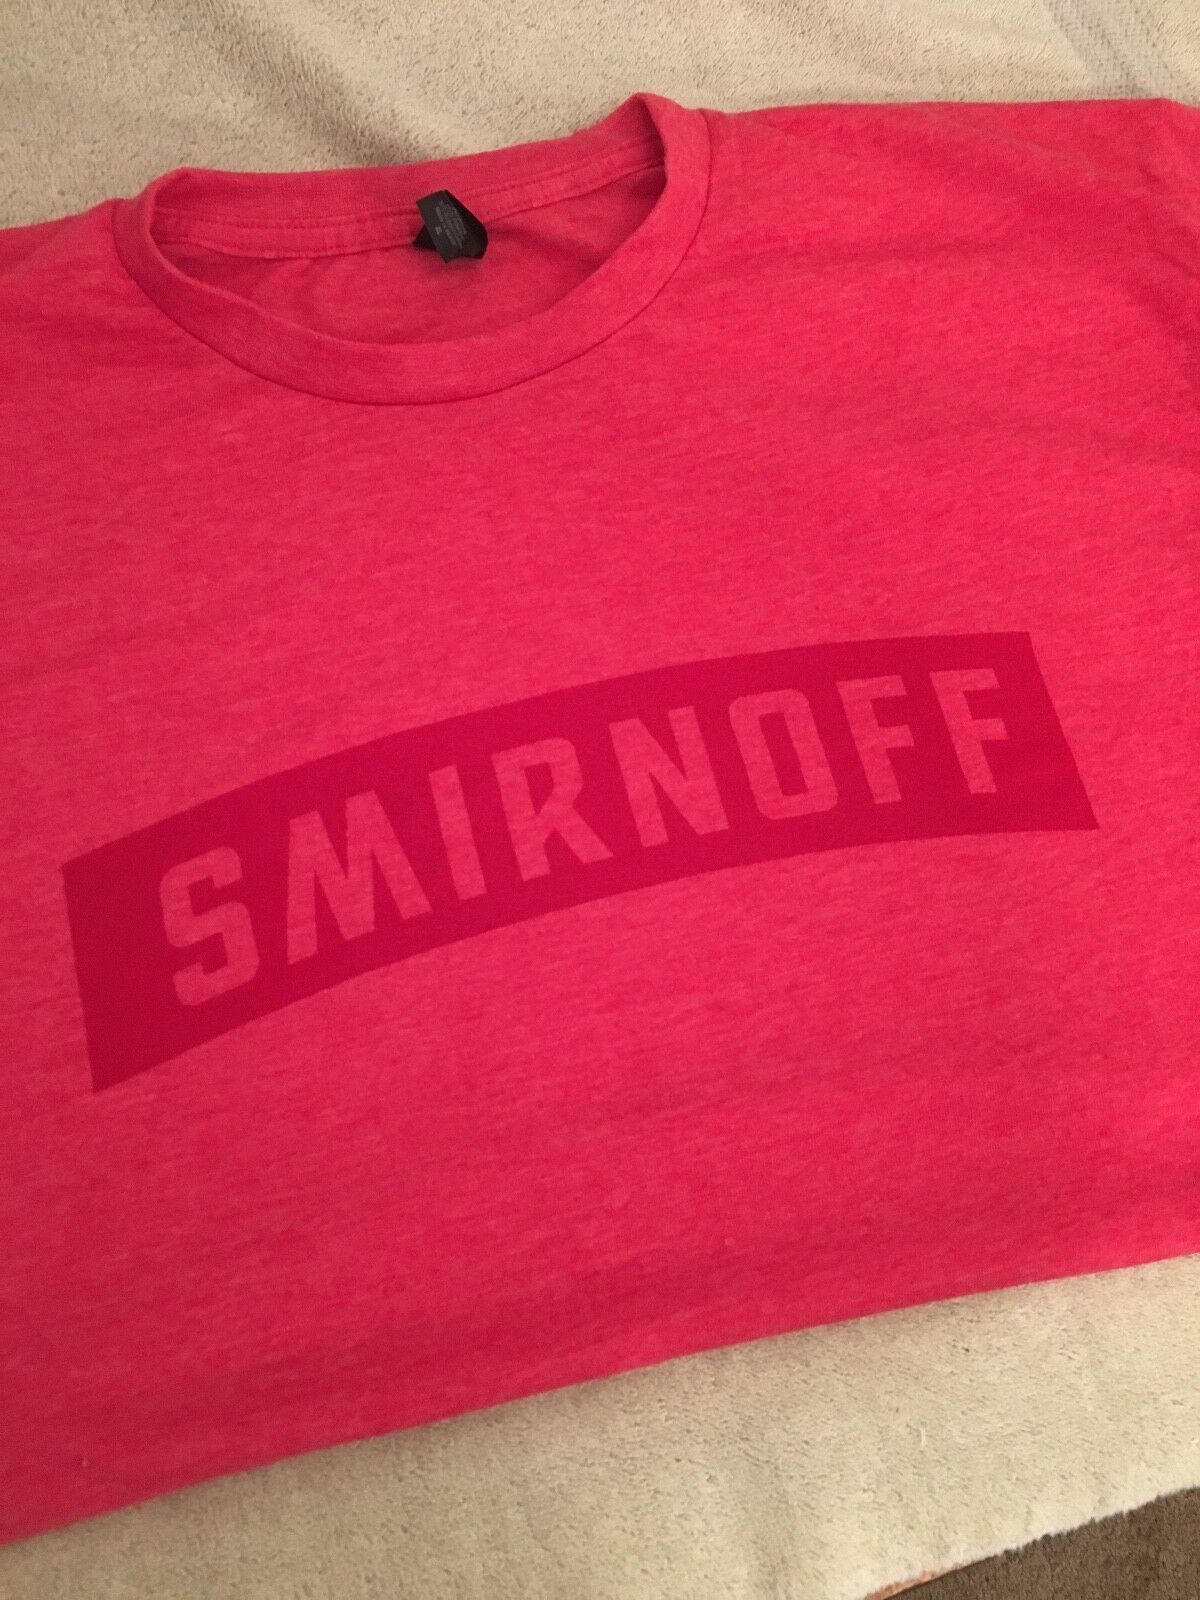 Smirnoff short sleeve shirt size XL Smirnoff